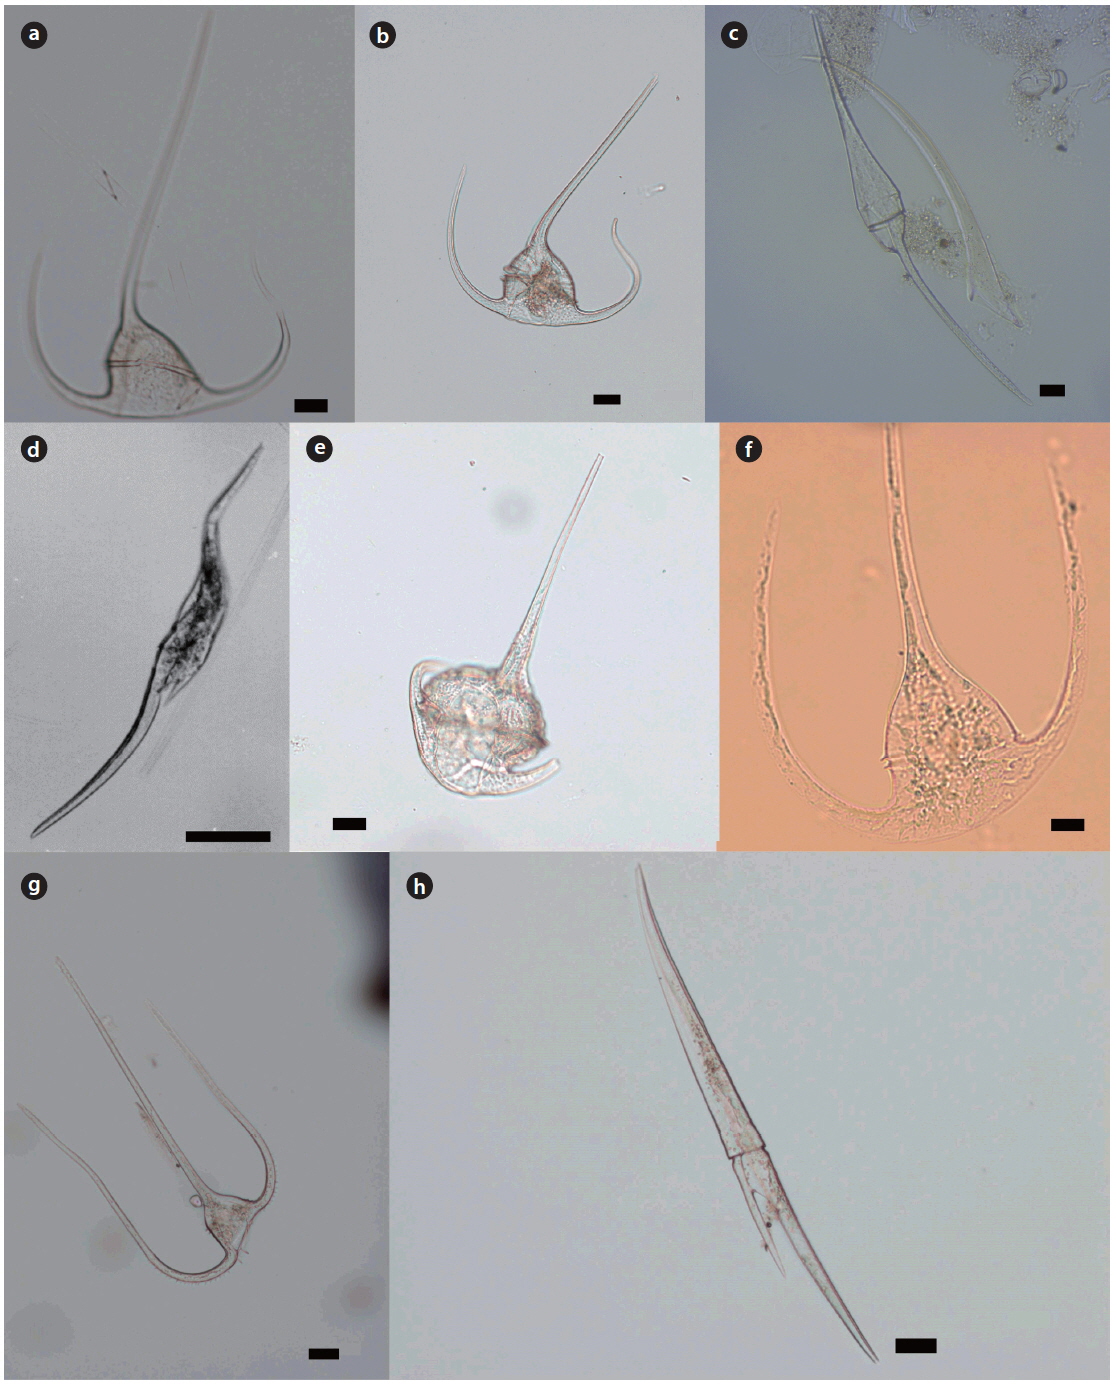 Light micrographs of the genus Tripos. (a) T. axialis (DV), (b) T. contortus (DV), (c) T. fusus var. schuettii (DV), (d) T. geniculatus (DV), (e) T. gibberus var. sinistrus (VV), (f ) T. gracilis var. symmetricus (DV), (g) T. mollis (DV), (h) T. incisus (VV). Scale bars, 20 μm; DV, dorsal view; VV, ventral view.